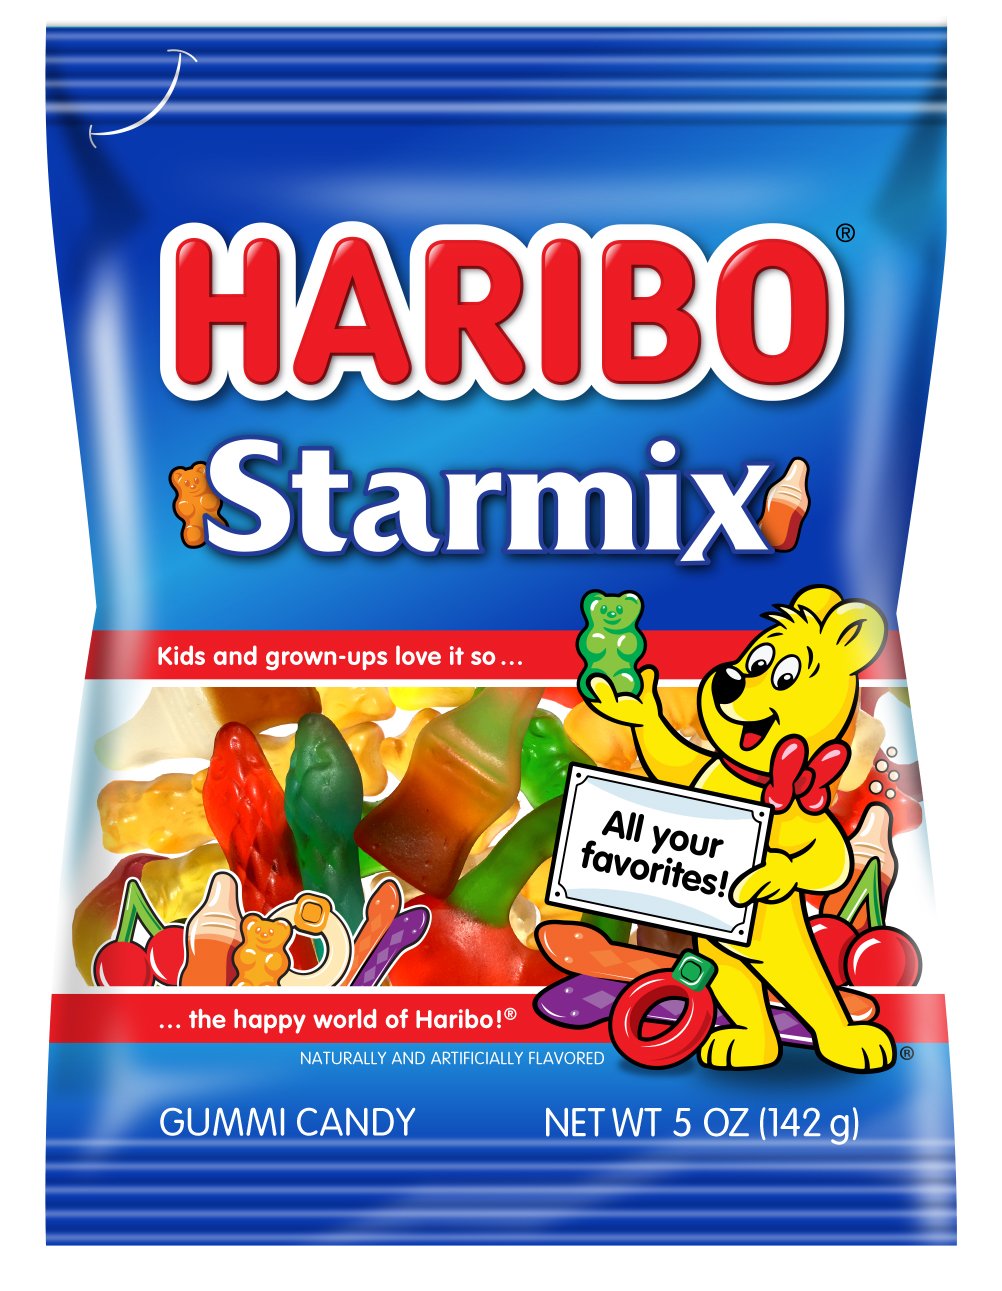 12-Pack 5-Oz HARIBO Starmix Gummi Candy $10.55 shipped w/ Prime